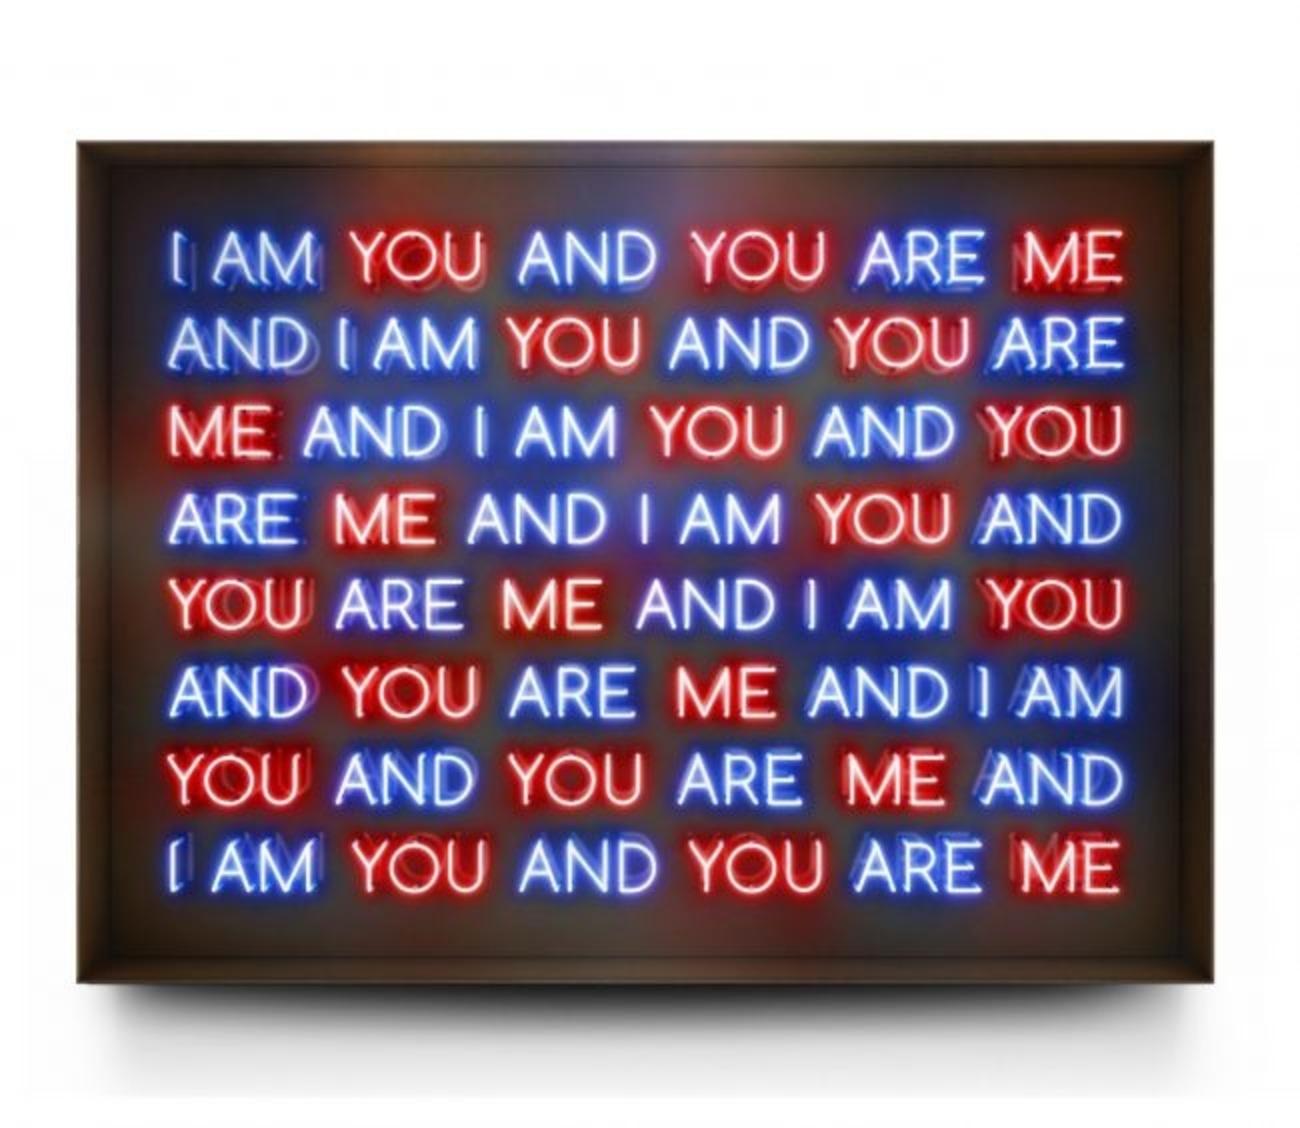 David Drebin - I AM YOU AND YOU ARE ME, Sculpture 2015